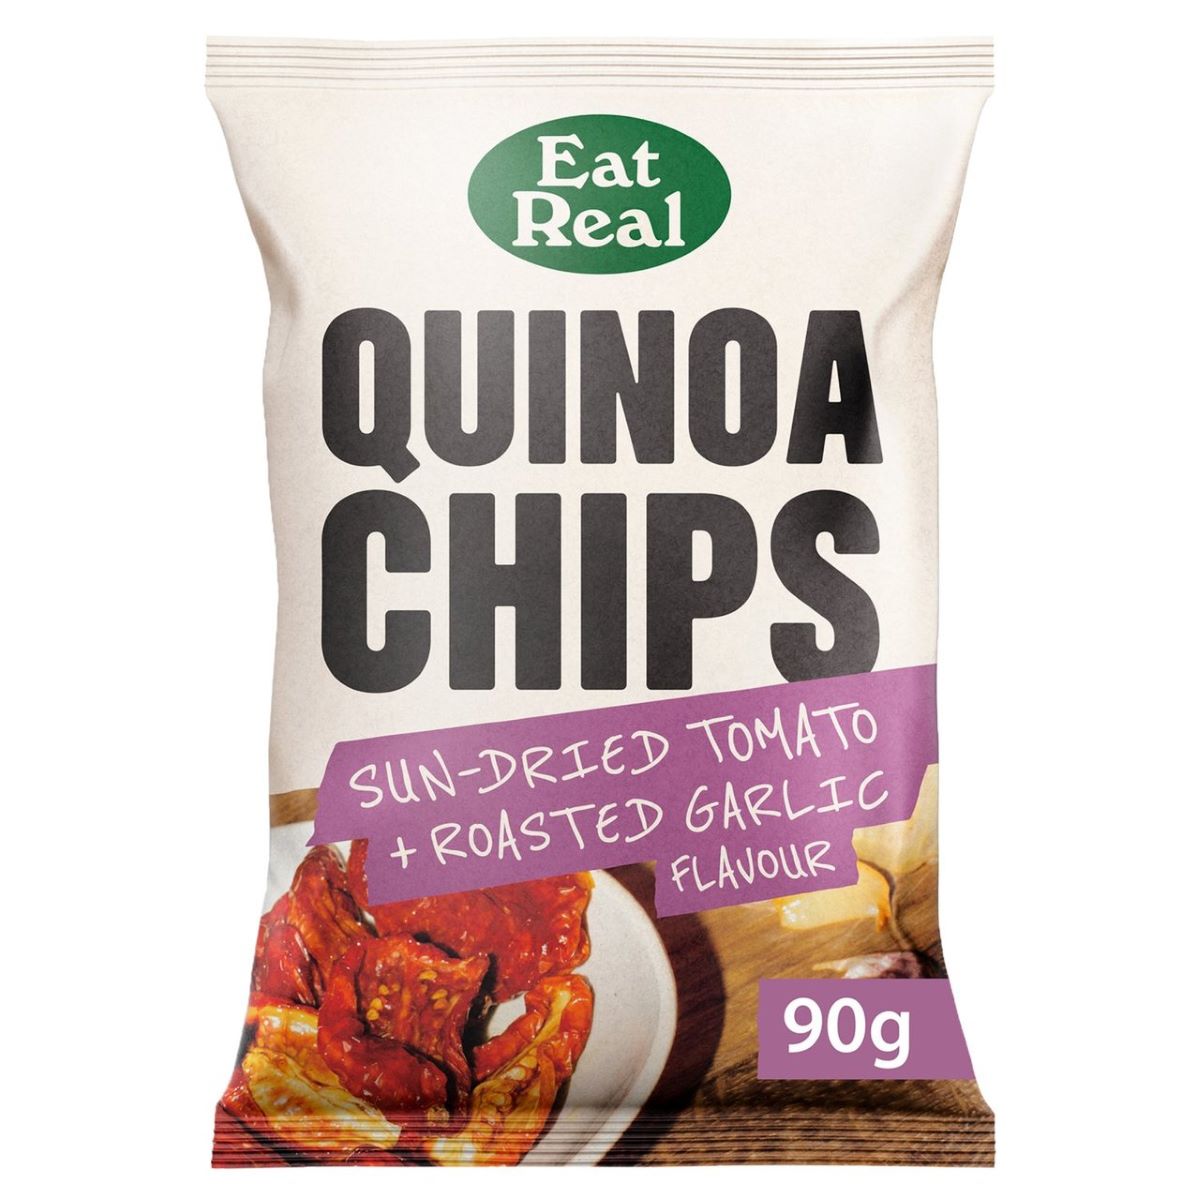 Eat Real Quinoa Chips Sundried Tomato & Roasted Garlic 90g